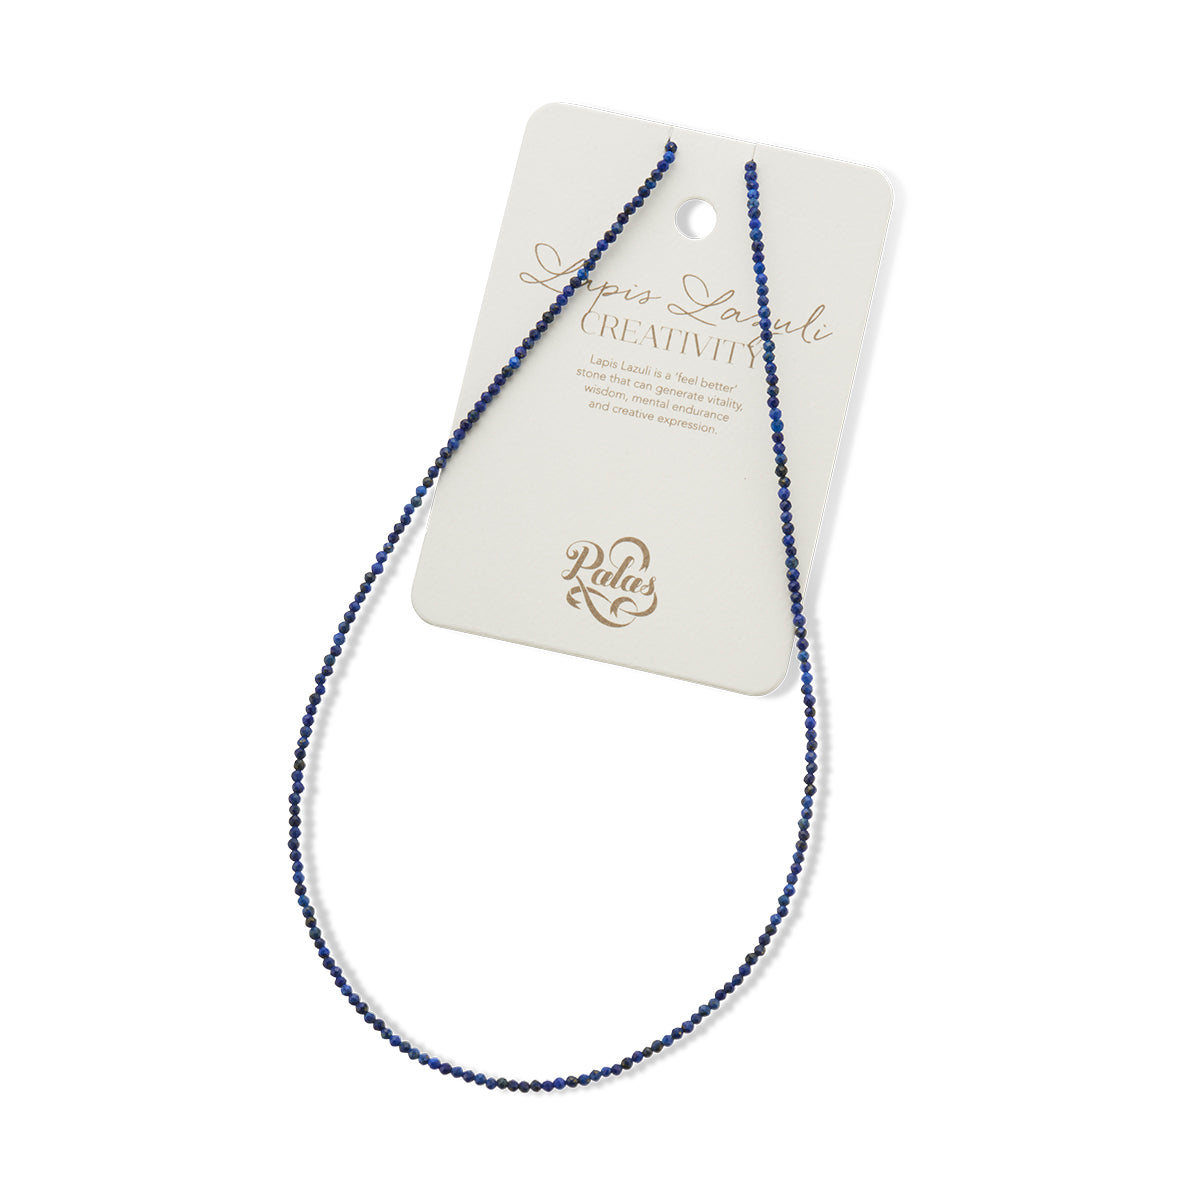 Lapis Lazuli empower gem necklace